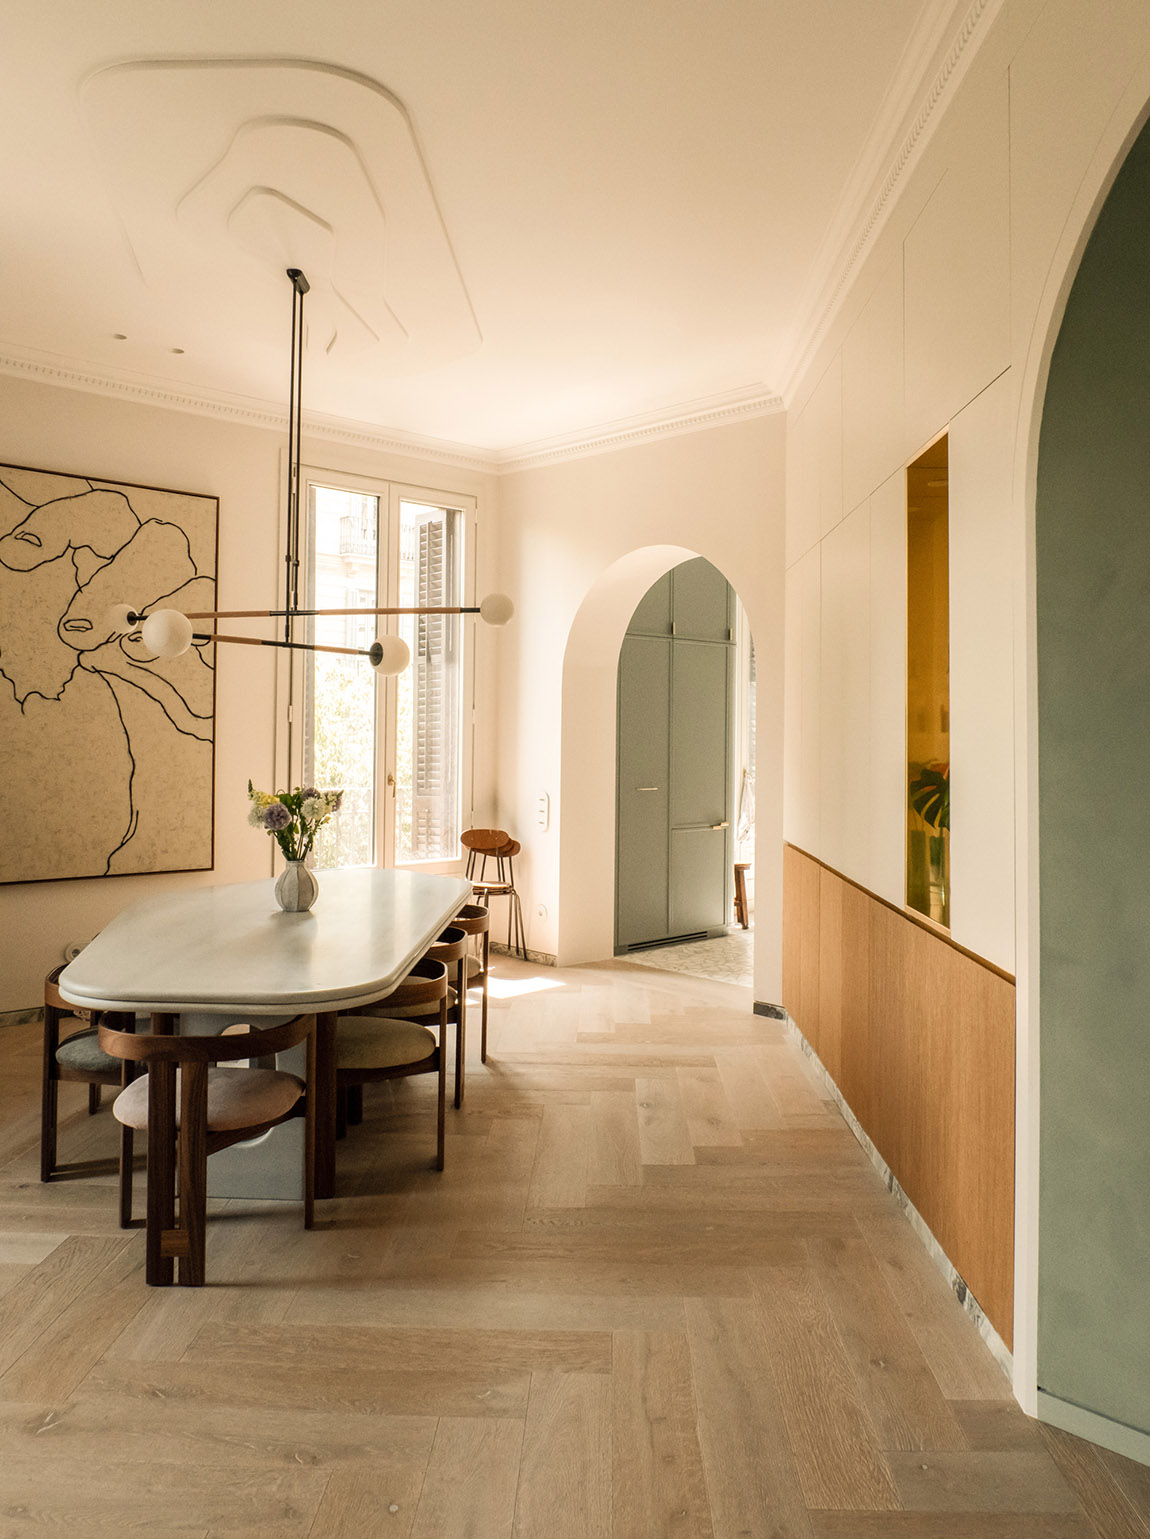 Georg Kayser Studio: Timeless and elegant spaces infused with warm minimalism